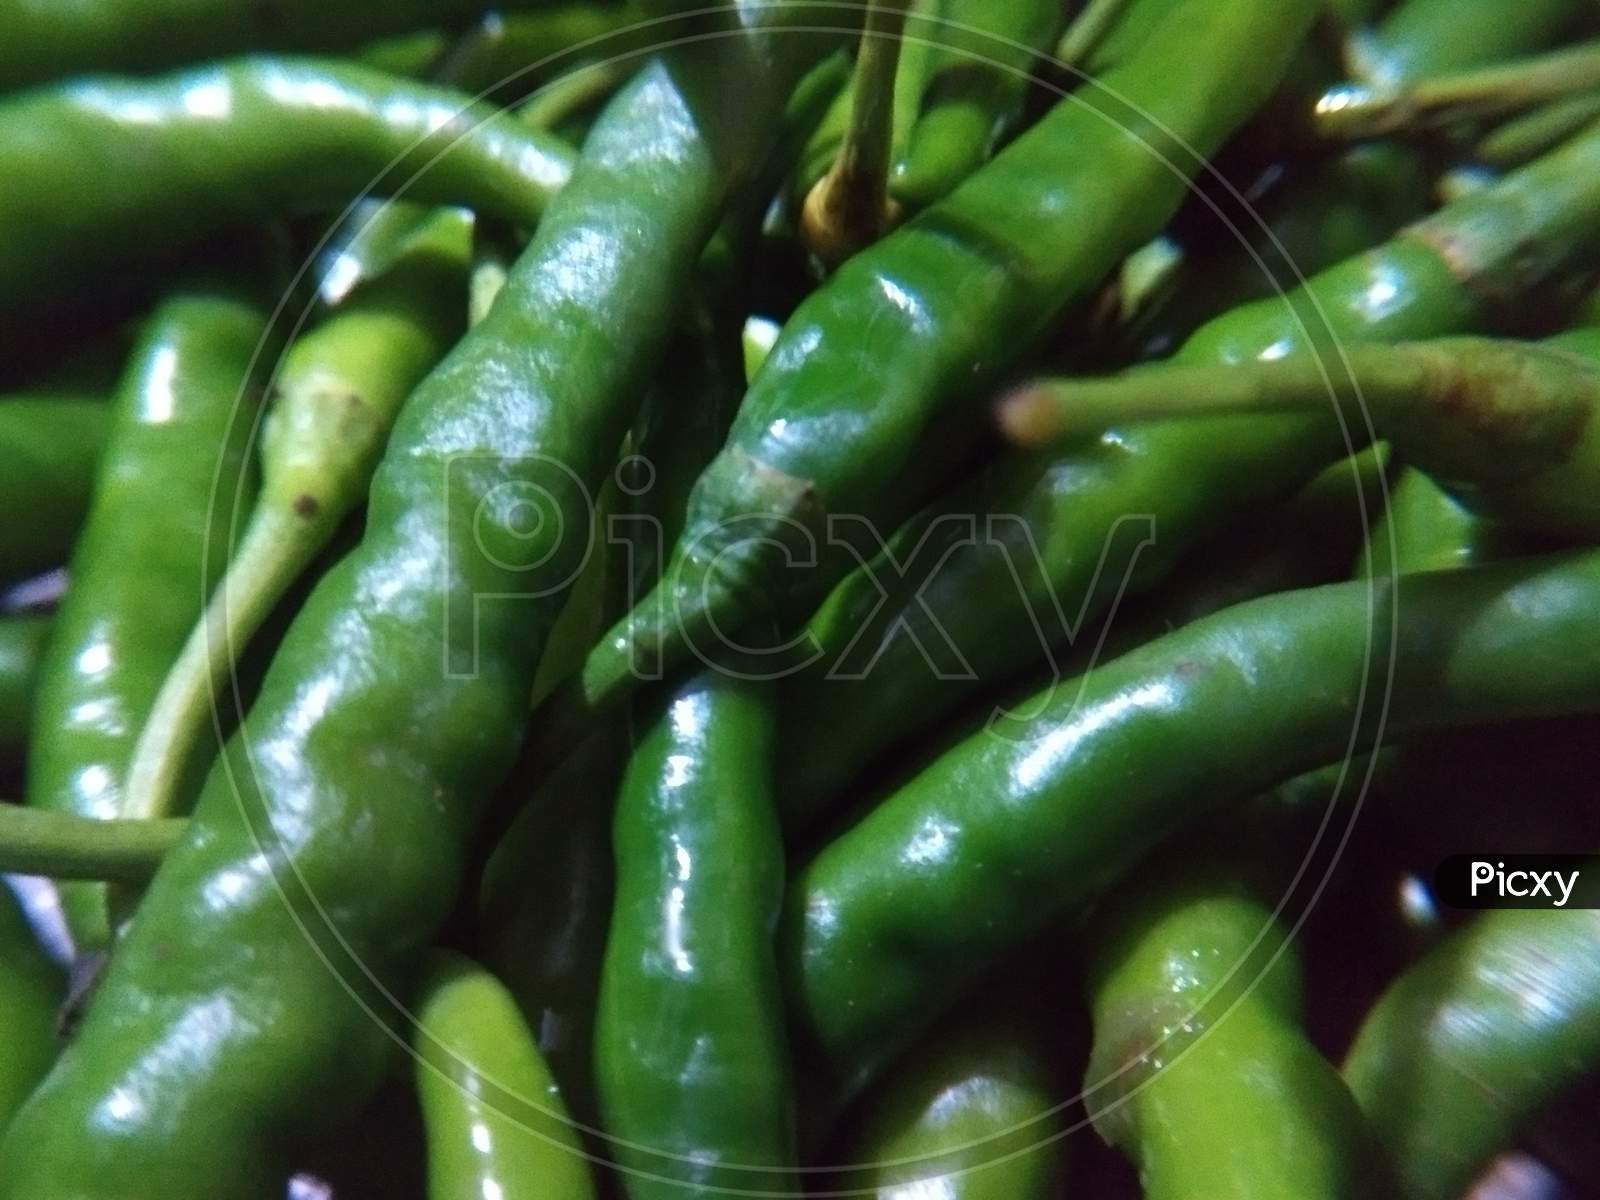 Green chillies